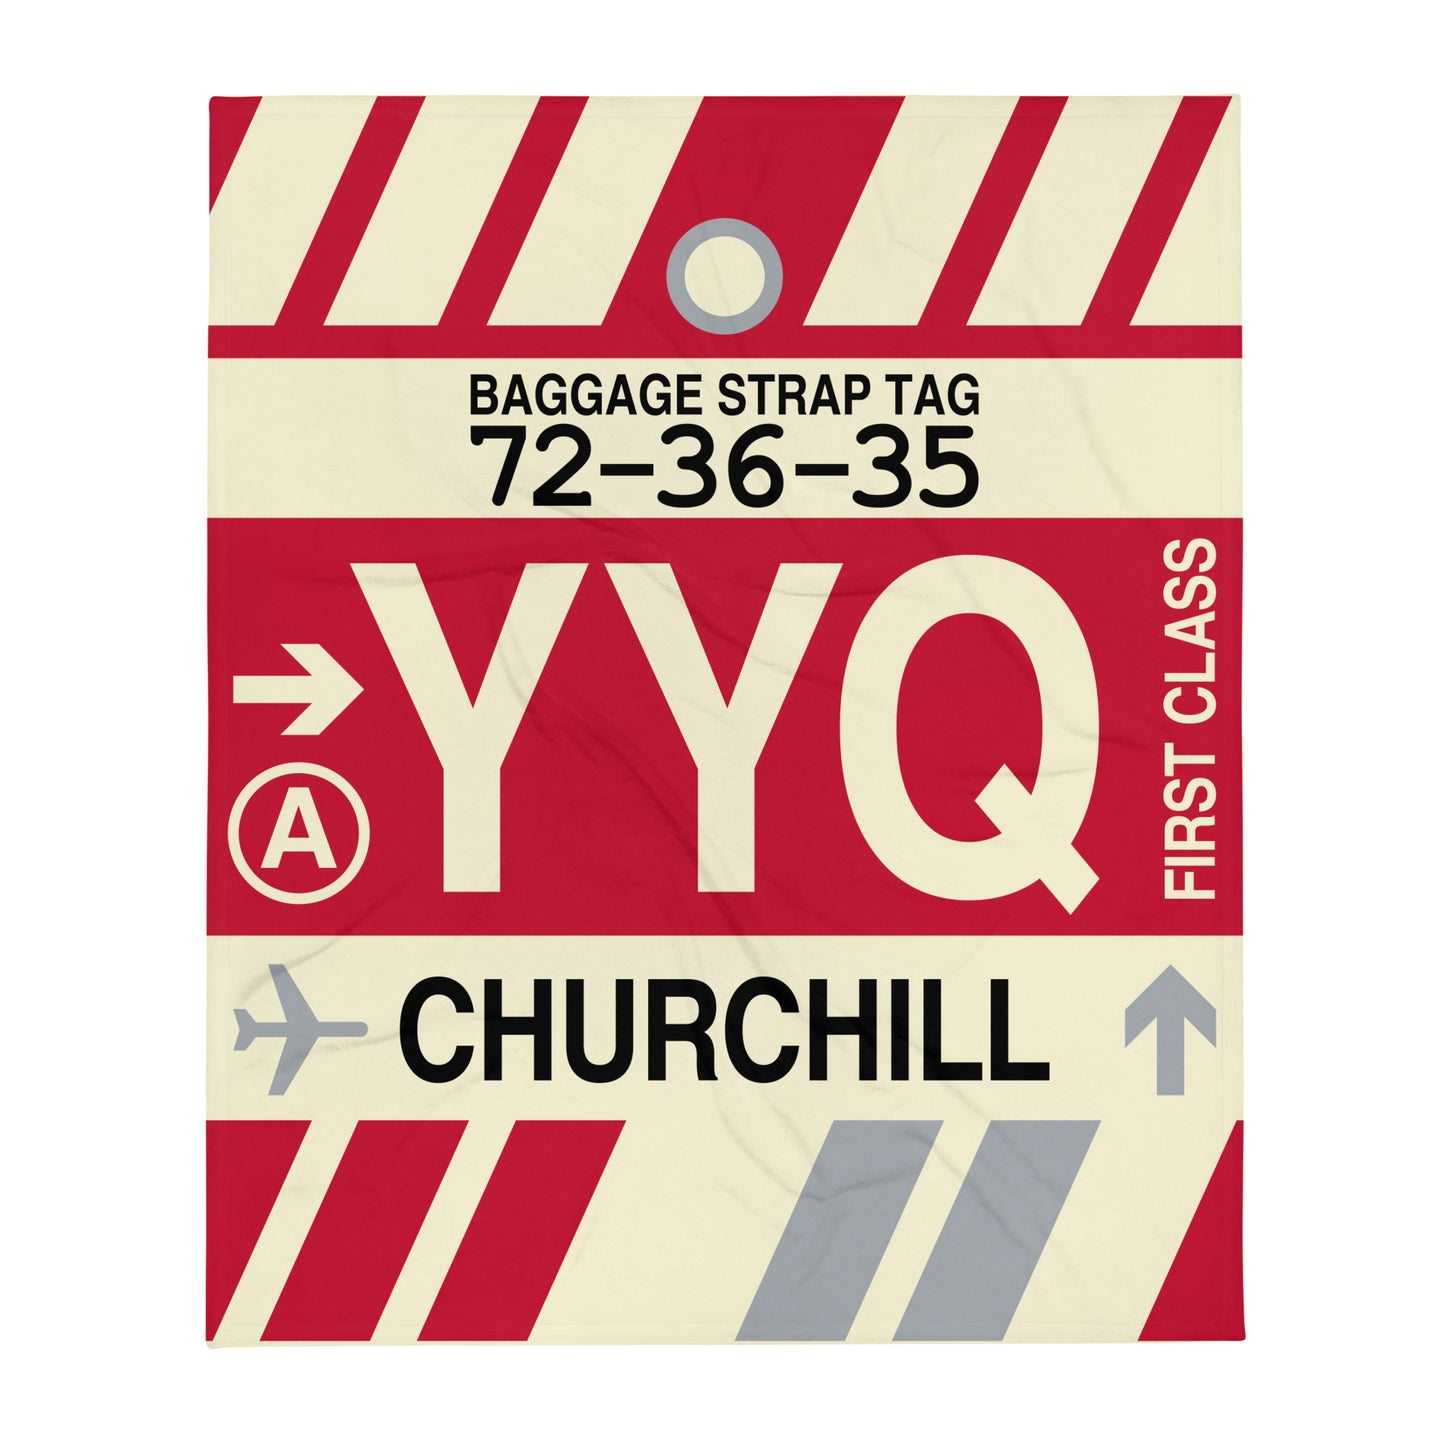 Travel Gift Throw Blanket • YYQ Churchill • YHM Designs - Image 01